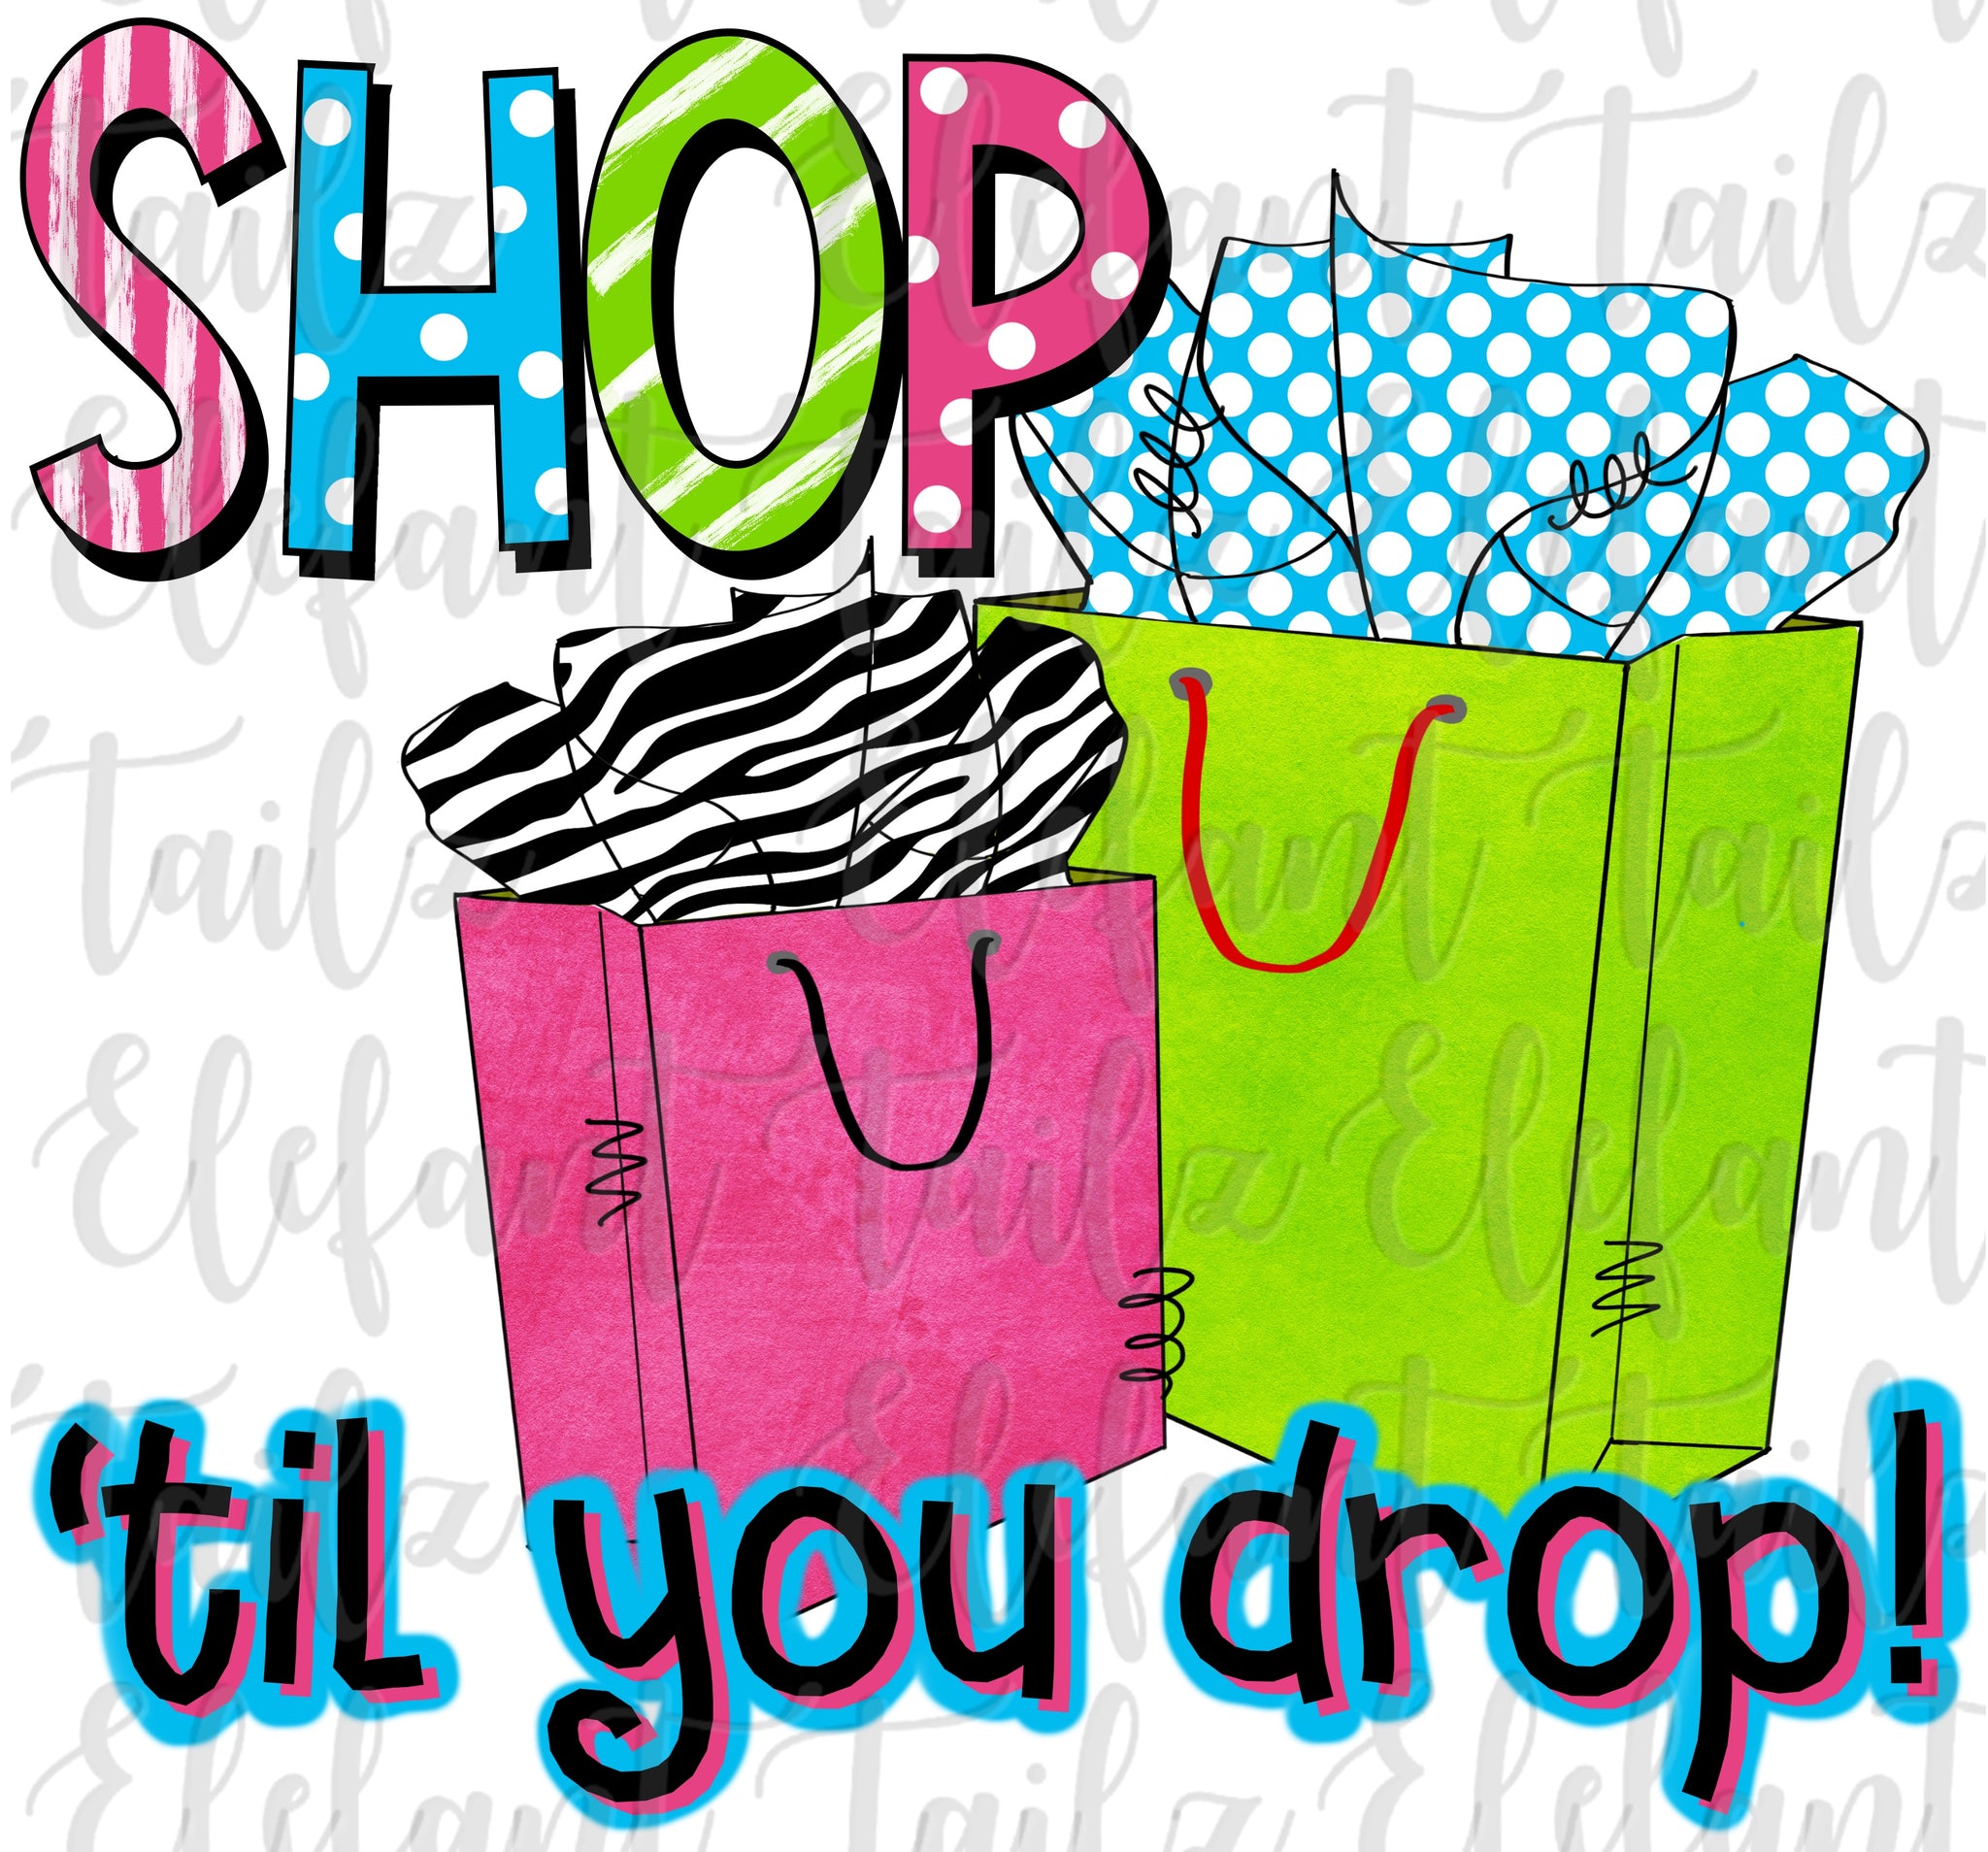 Shop Til You Drop